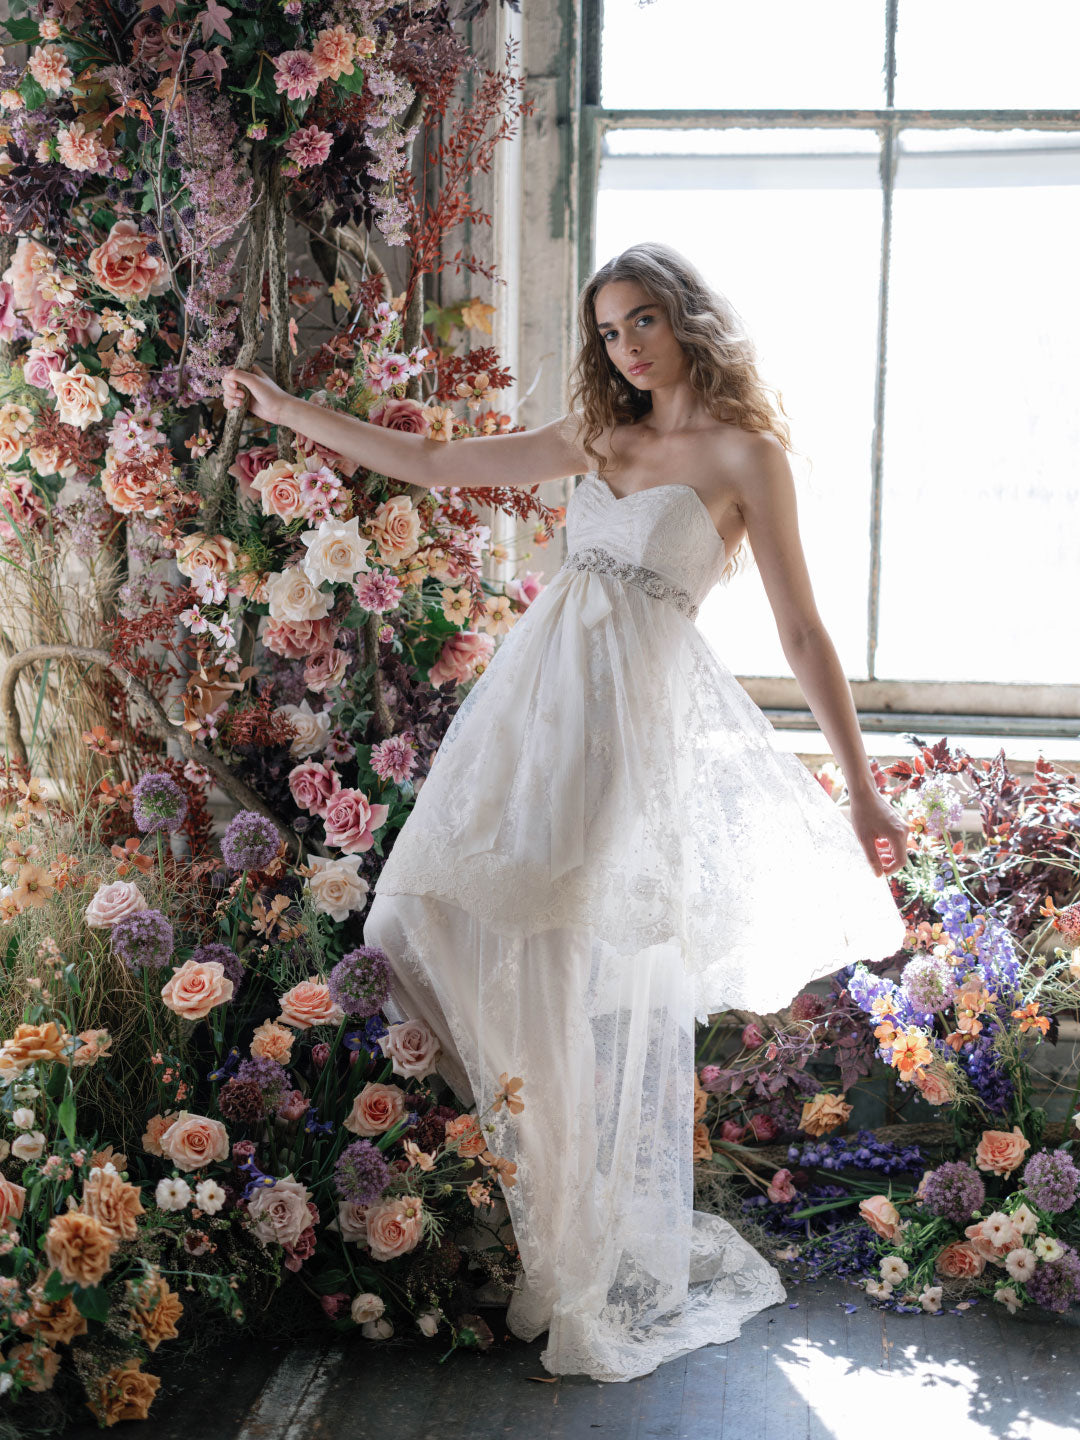 Sevigne Couture Wedding Dress by Claire Pettibone